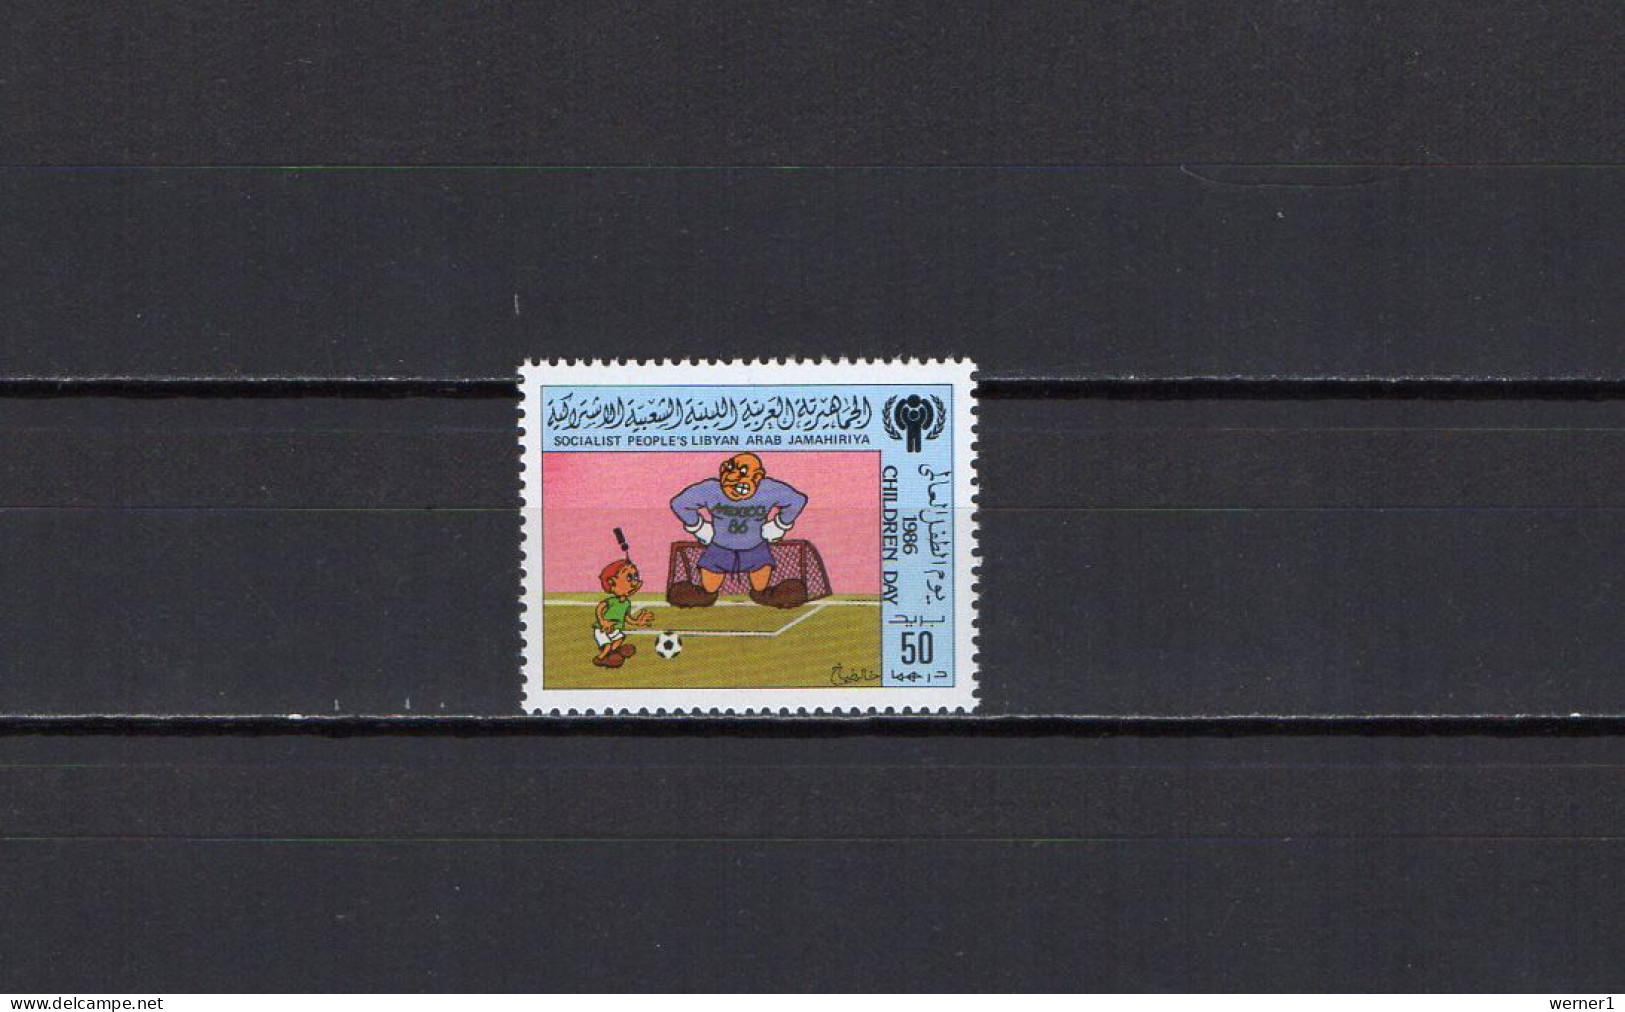 Libya 1986 Football Soccer Stamp MNH - Unused Stamps